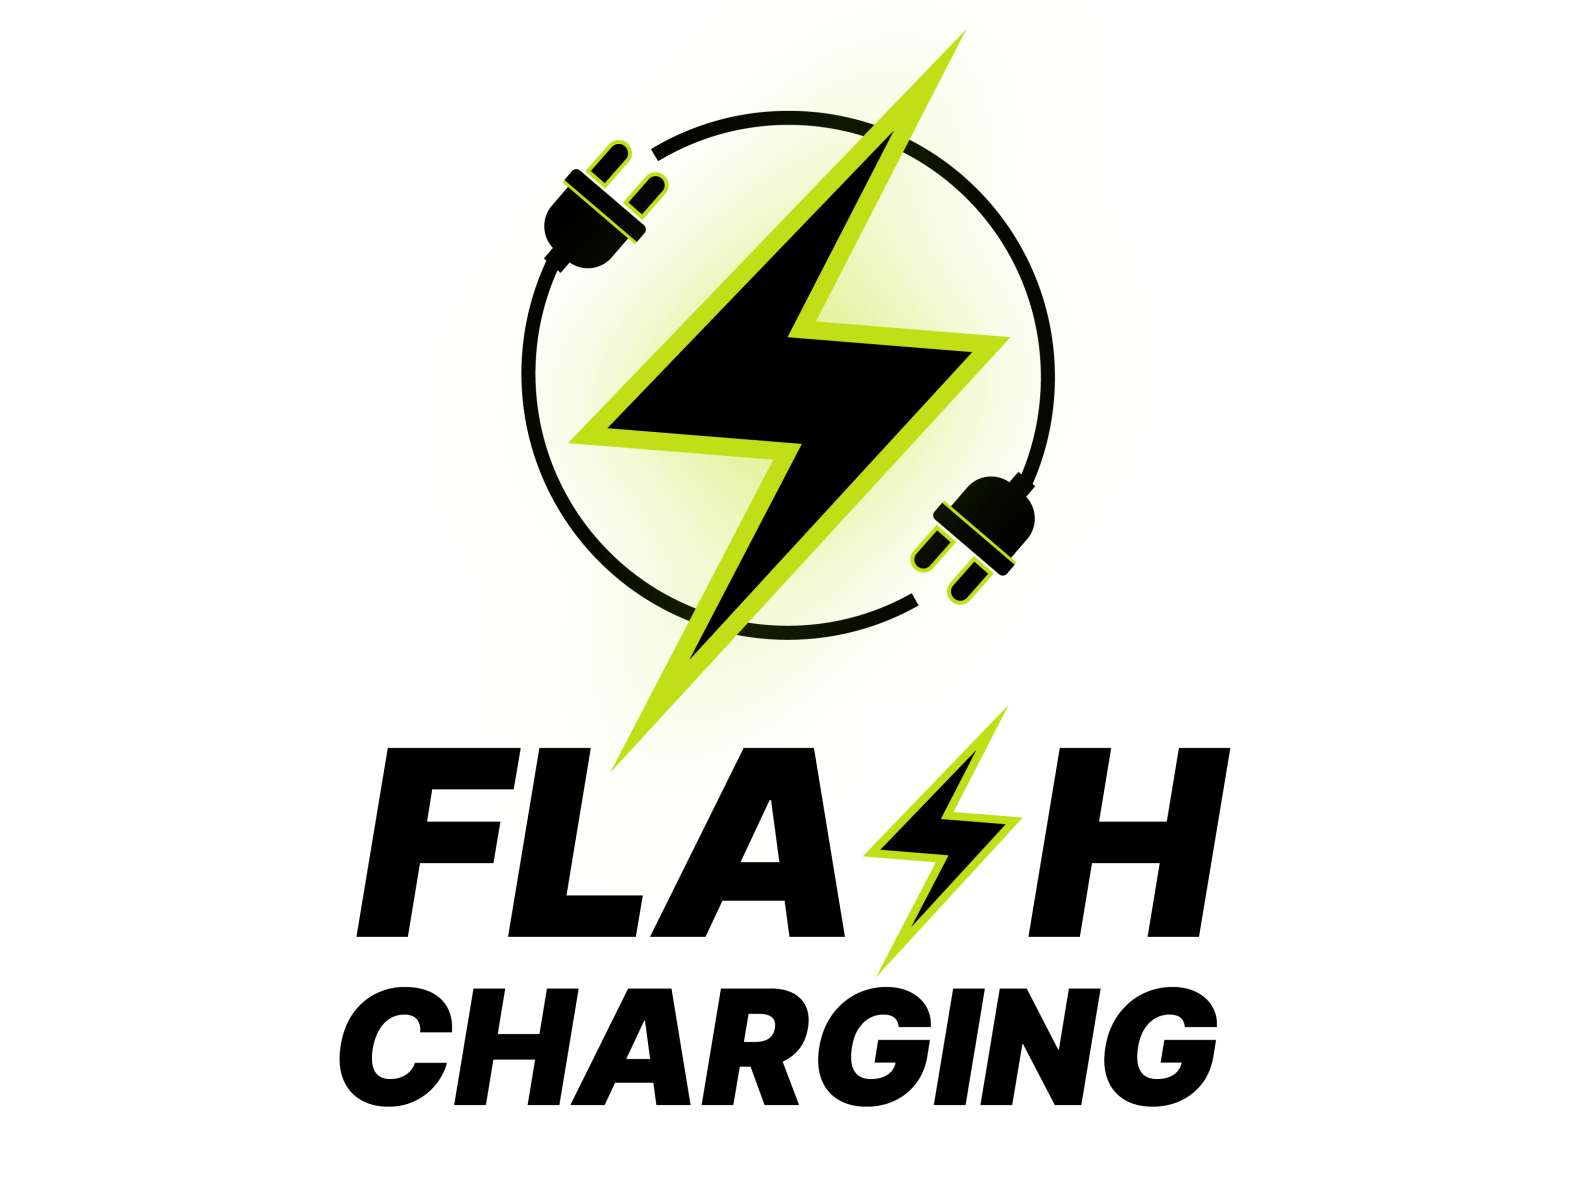 Battery charging symbol